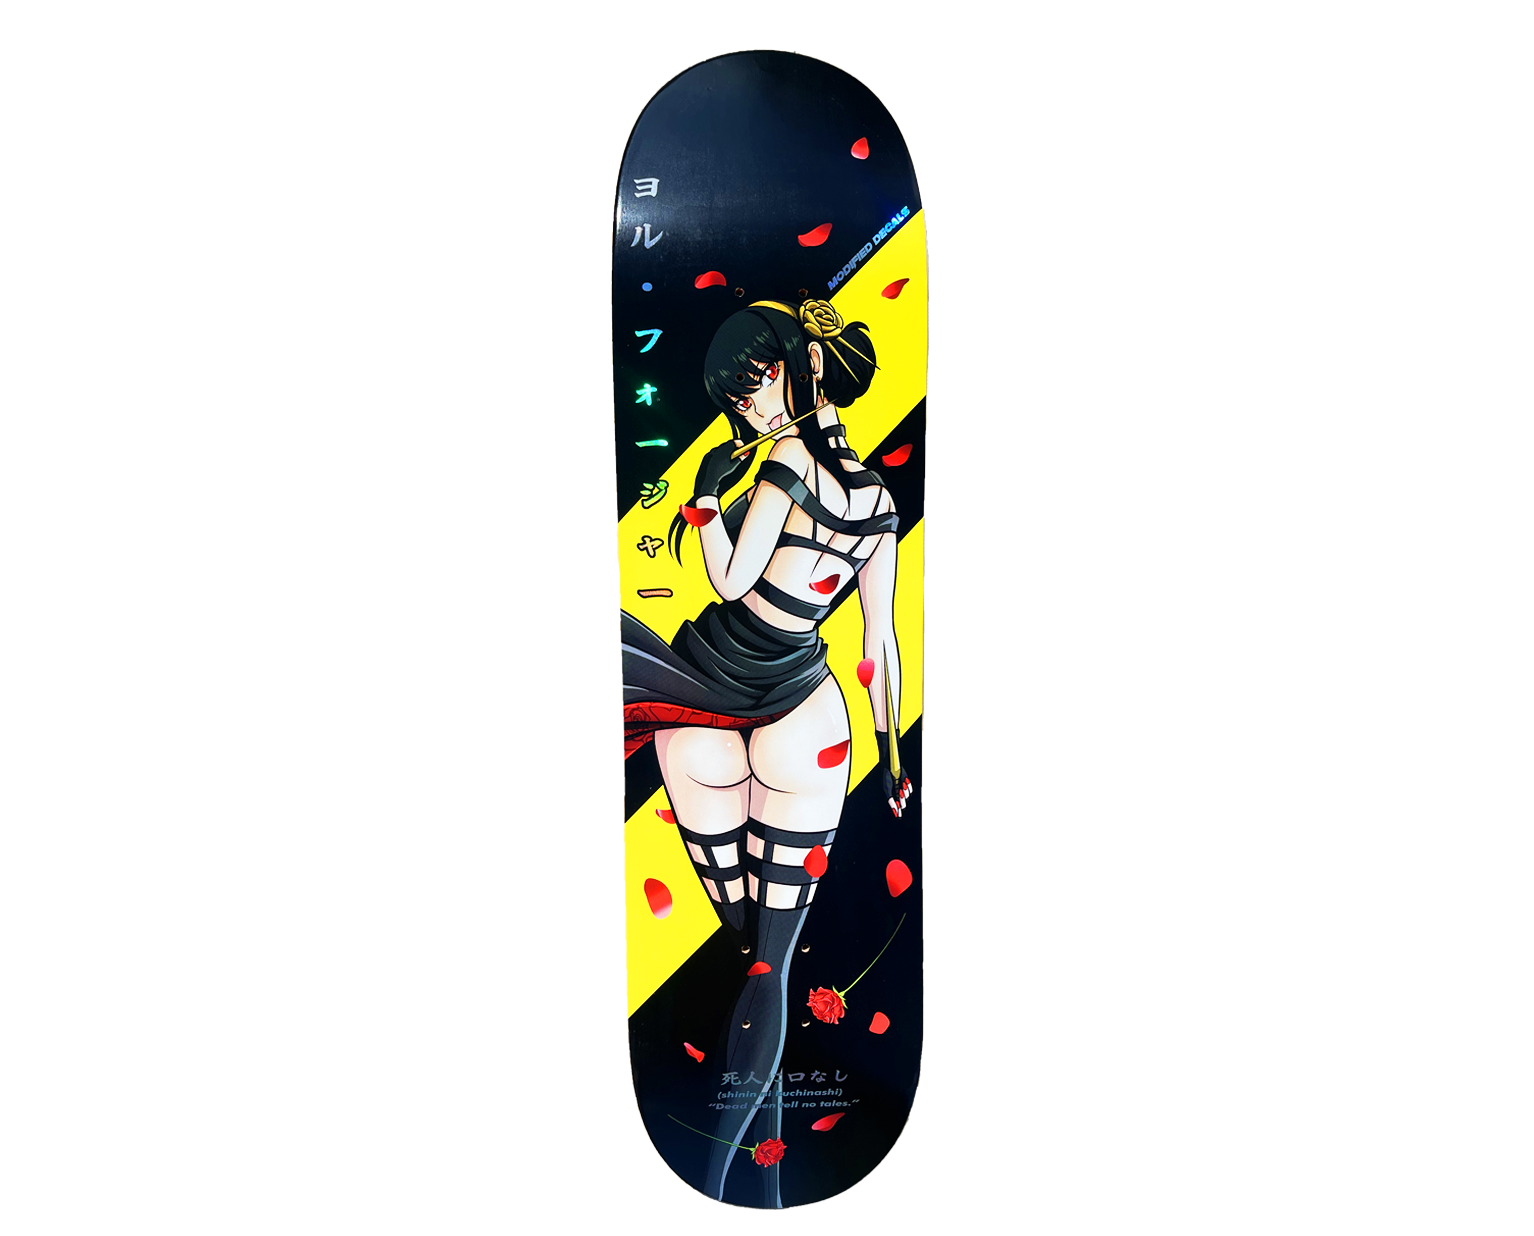 Anime Skateboard Deck Designs | Imouri